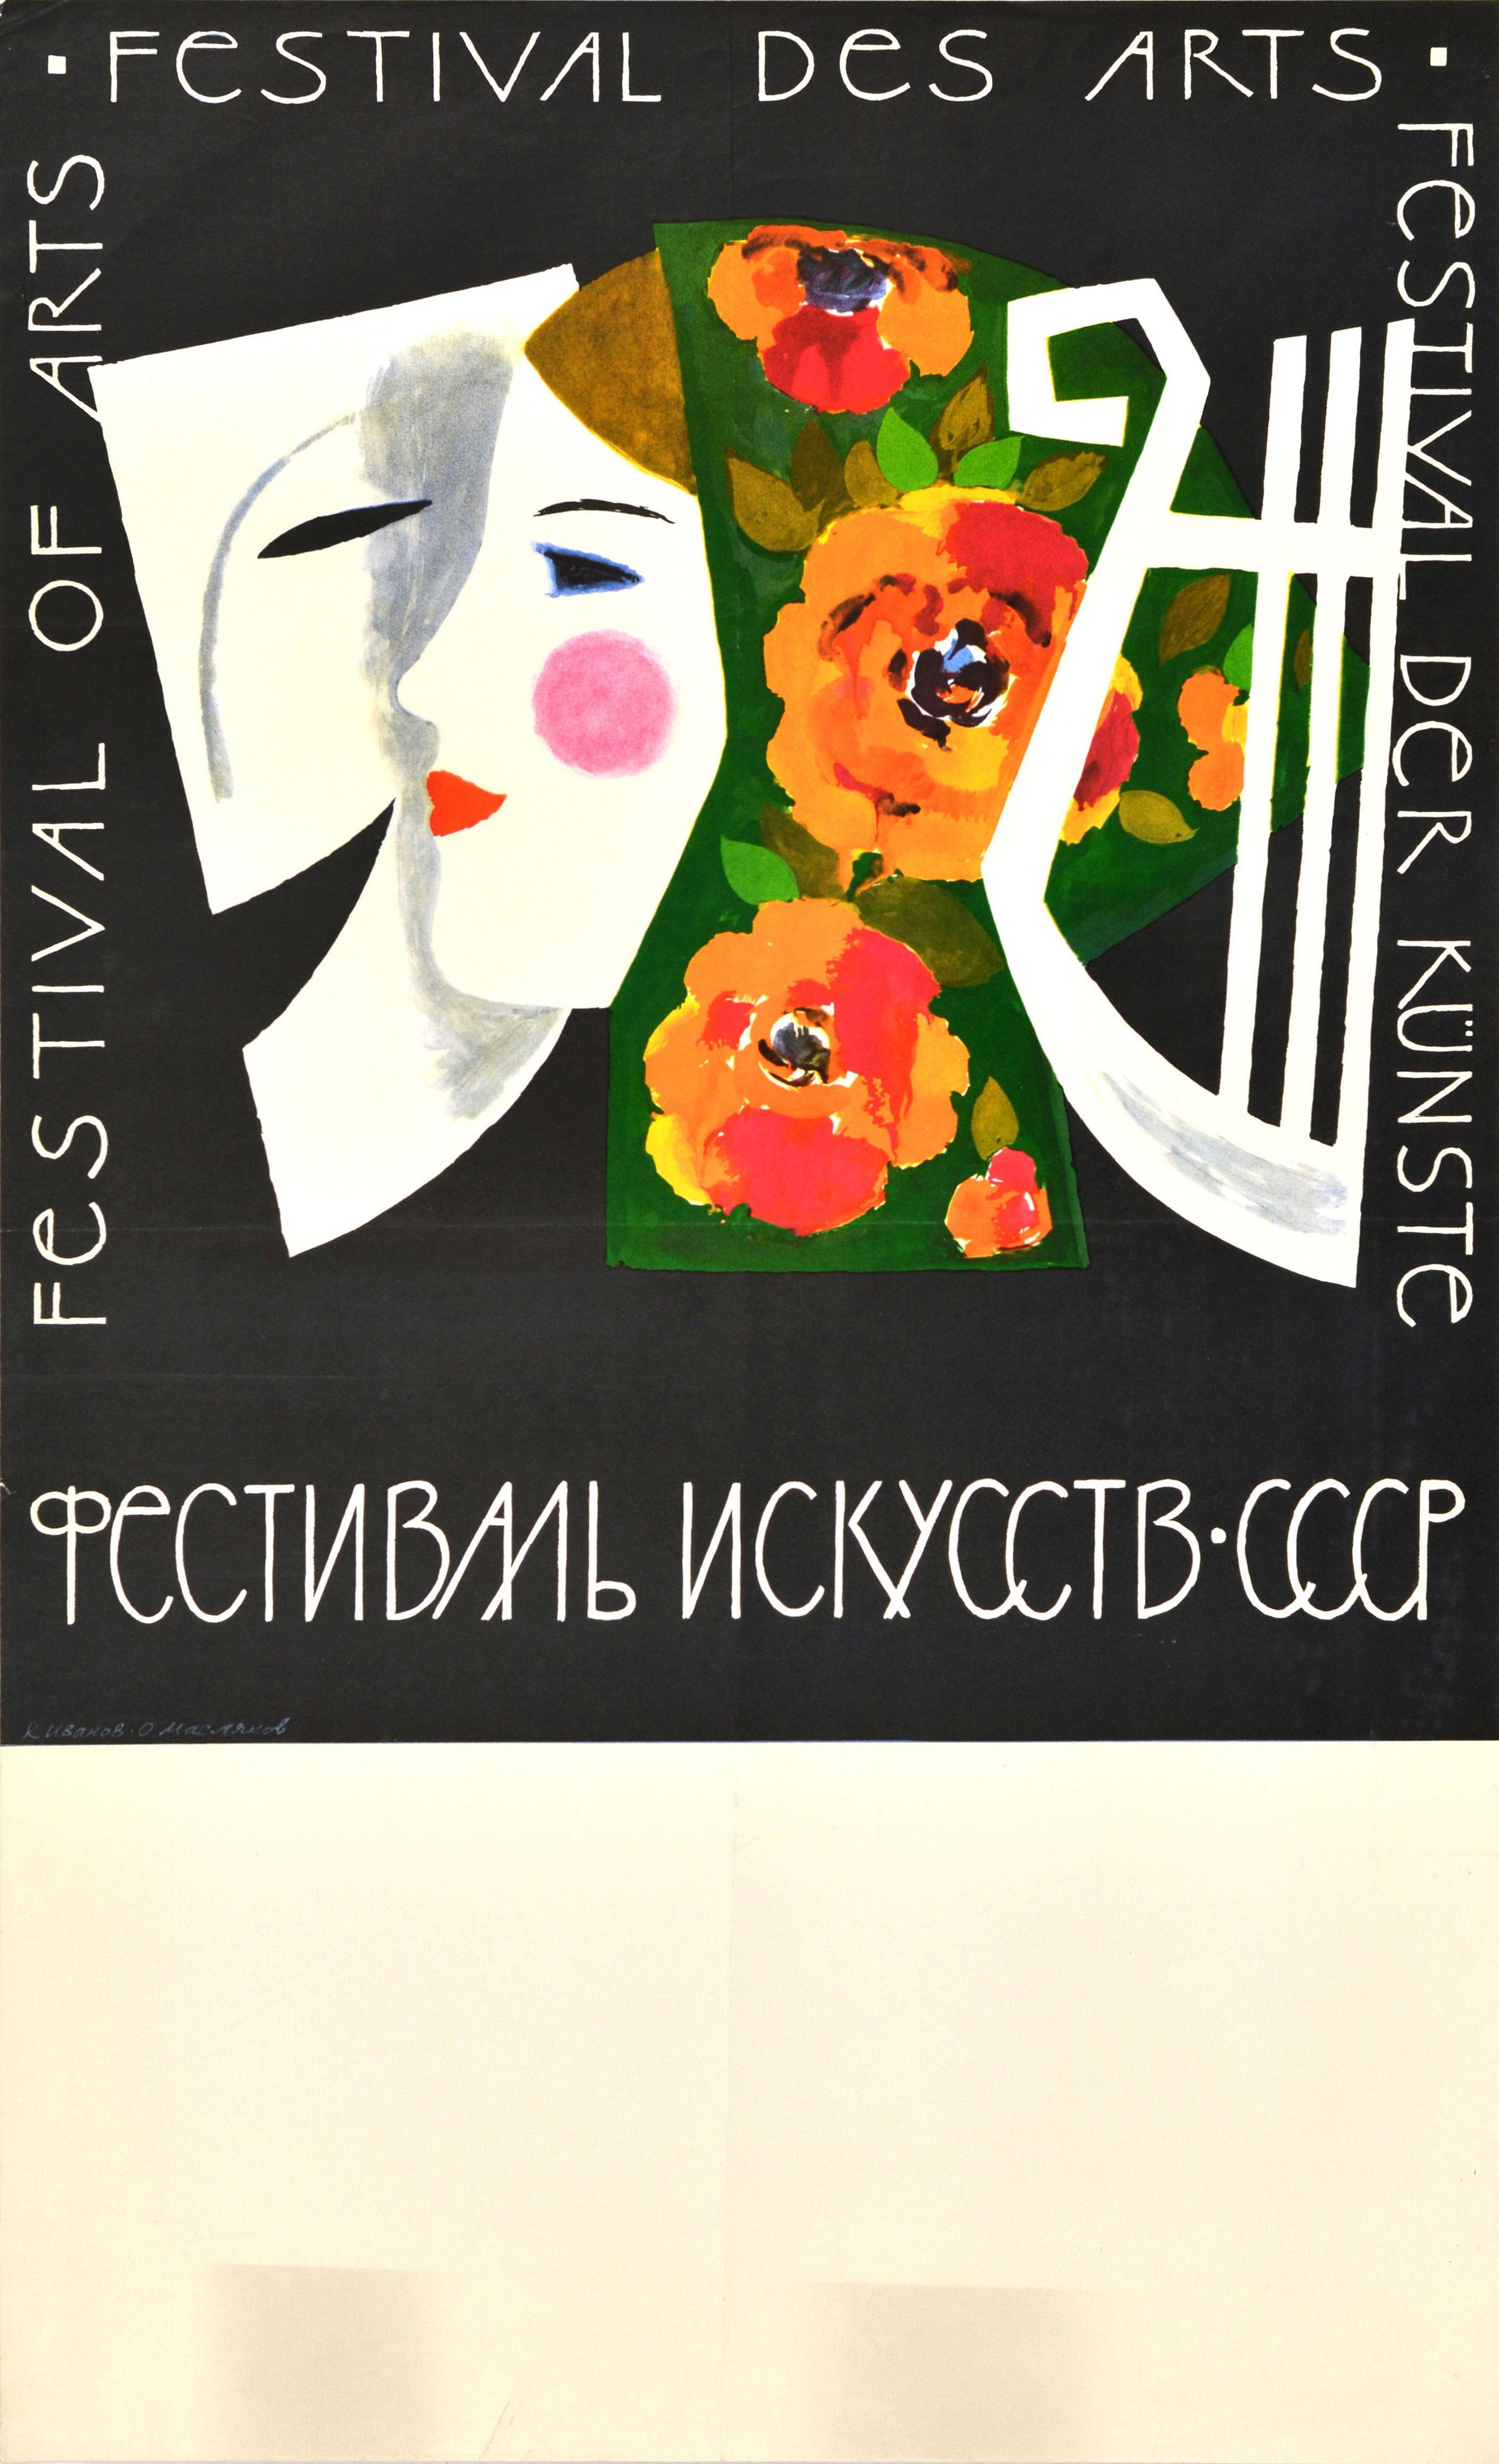 Unknown Print – Originales sowjetisches Werbeplakat Festival of Arts Kunst-Design-Maske